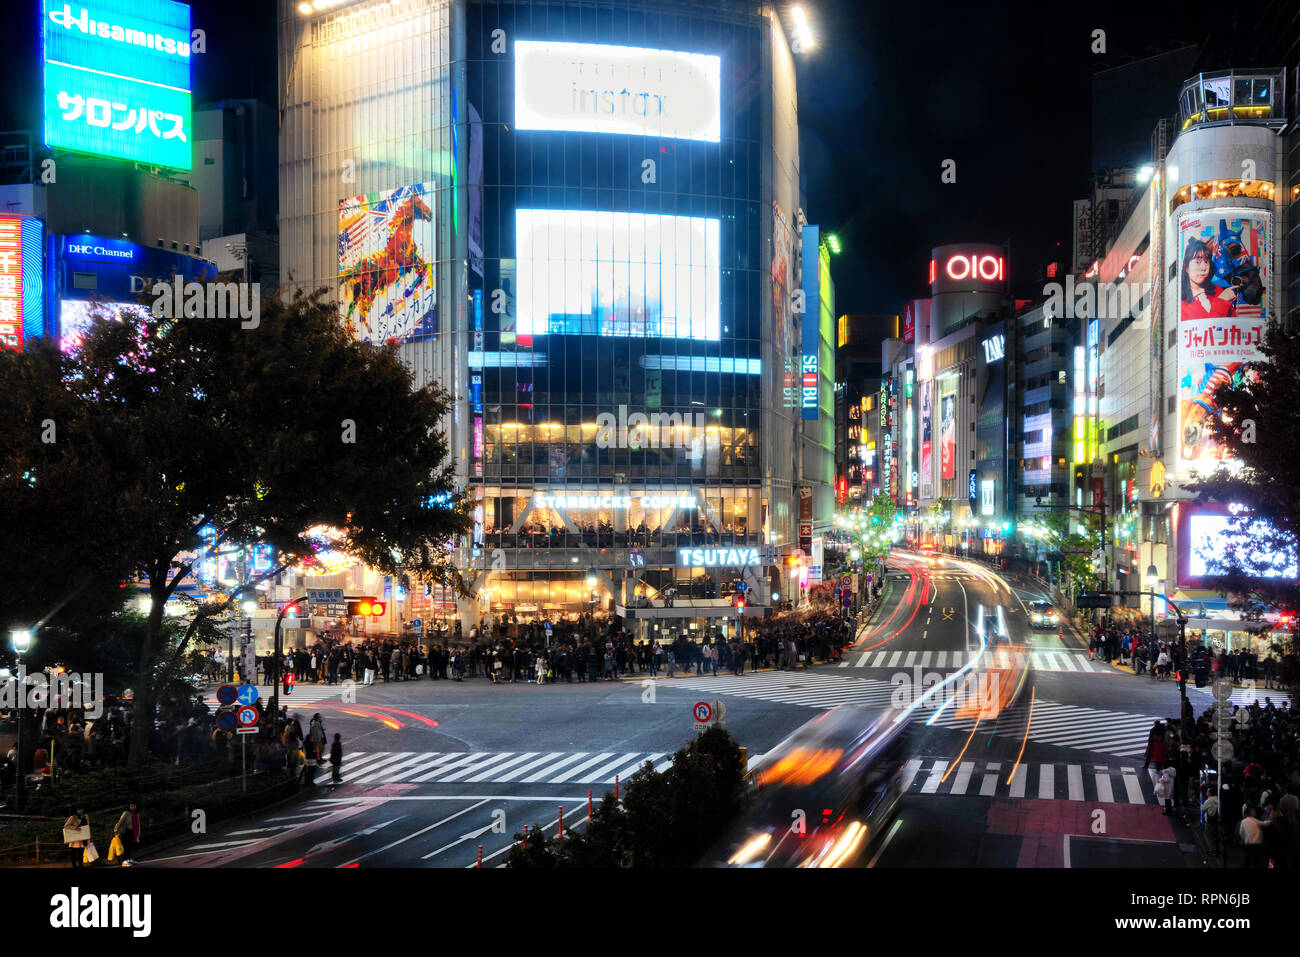 Slow exposure image of Shibuya Crossing in Tokyo, Japan Stock Photo